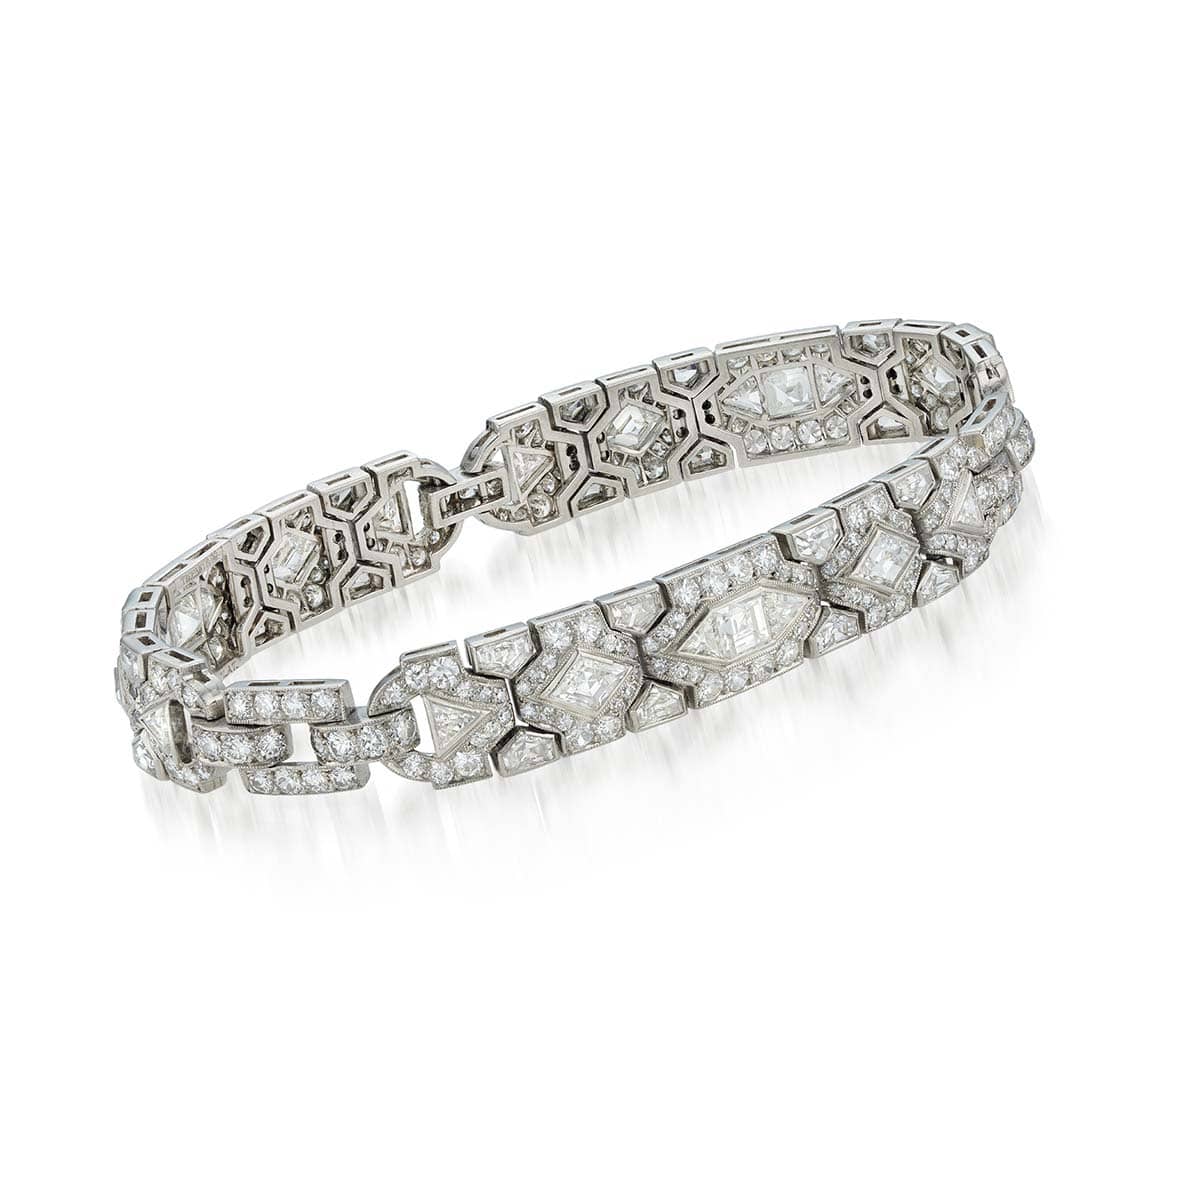 Available Jewels Tiffany art deco bracelet